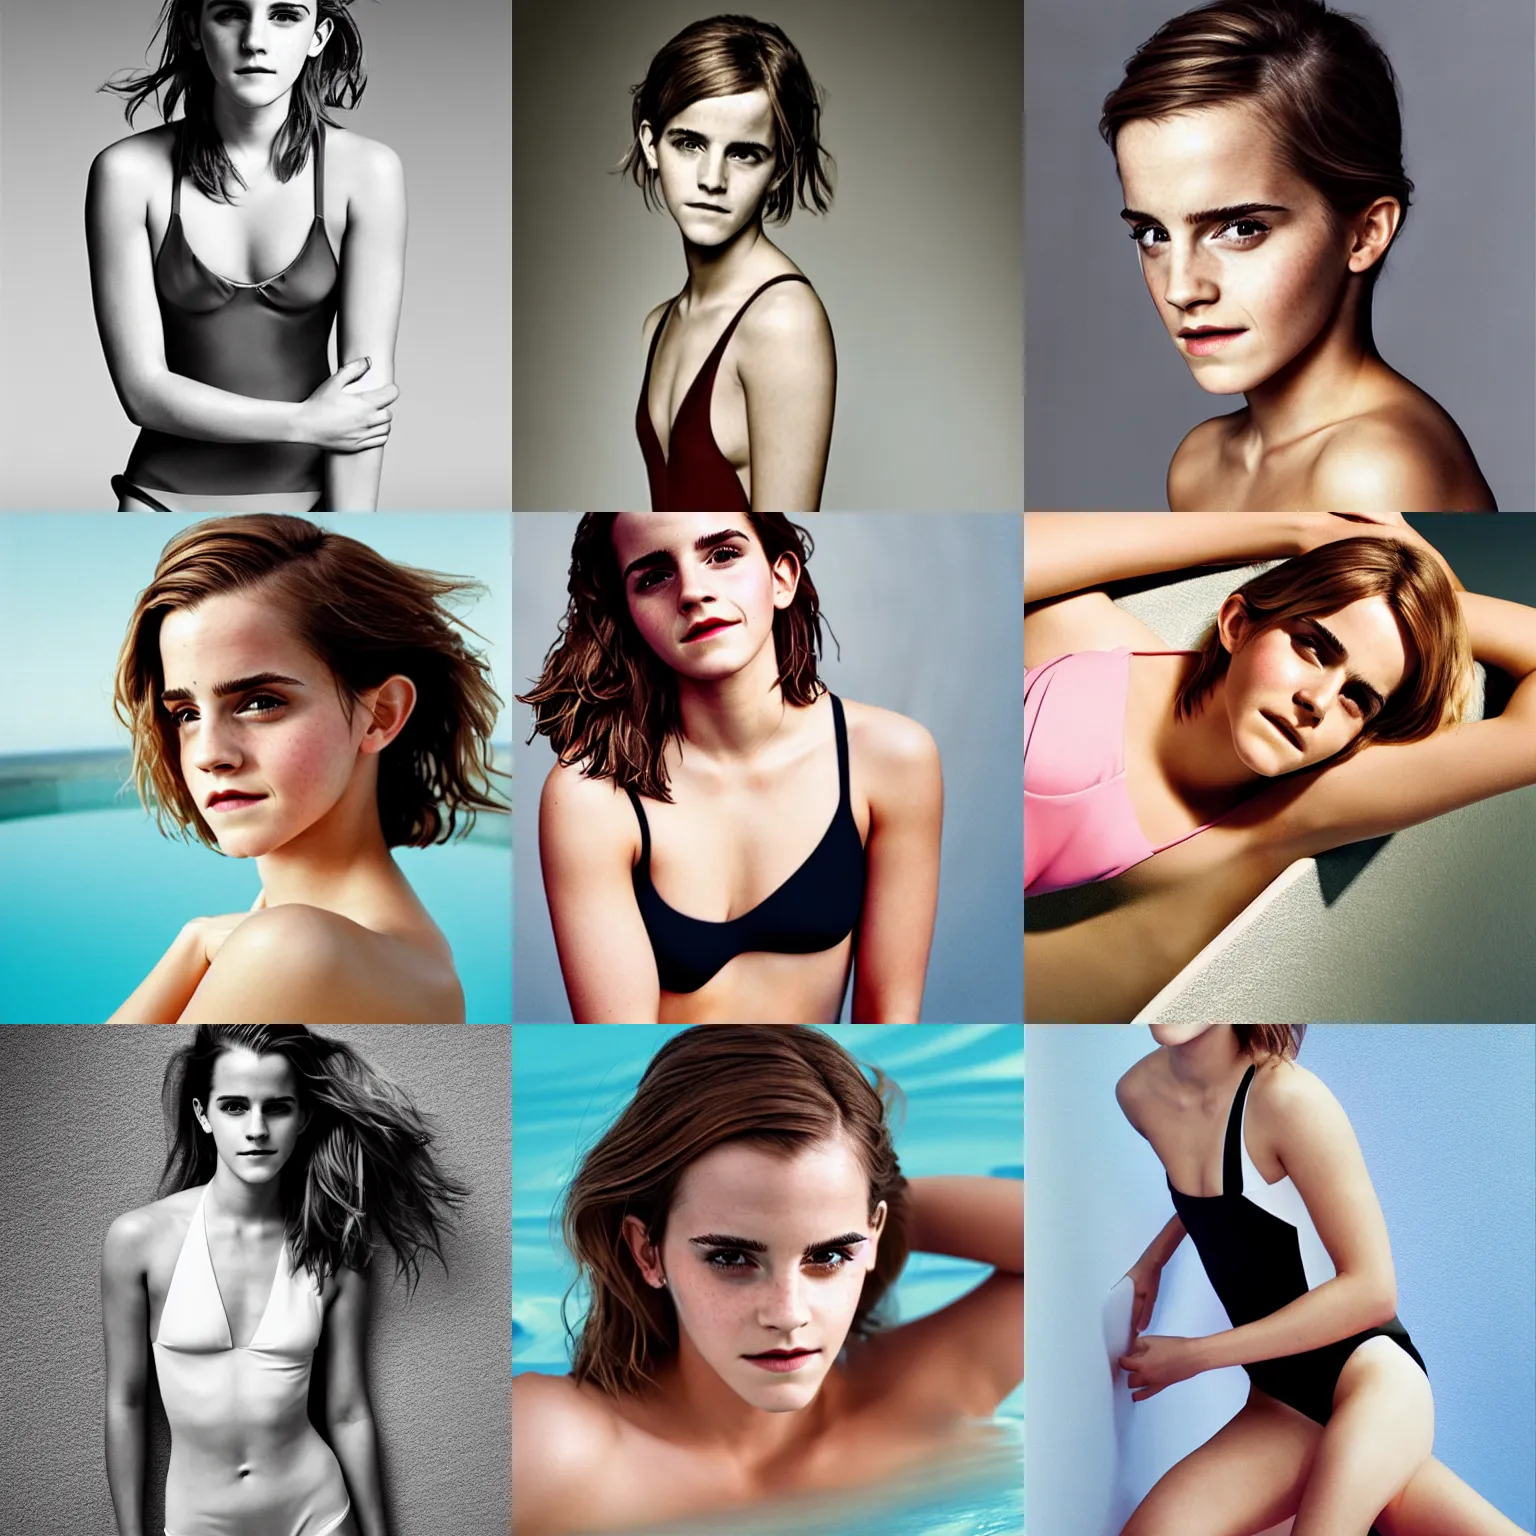 Prompt: Photo of Emma Watson in swimsuit, soft studio lighting, photo taken by Martin Schoeller for Calvin Klein, award-winning photograph, 24mm f/1.4